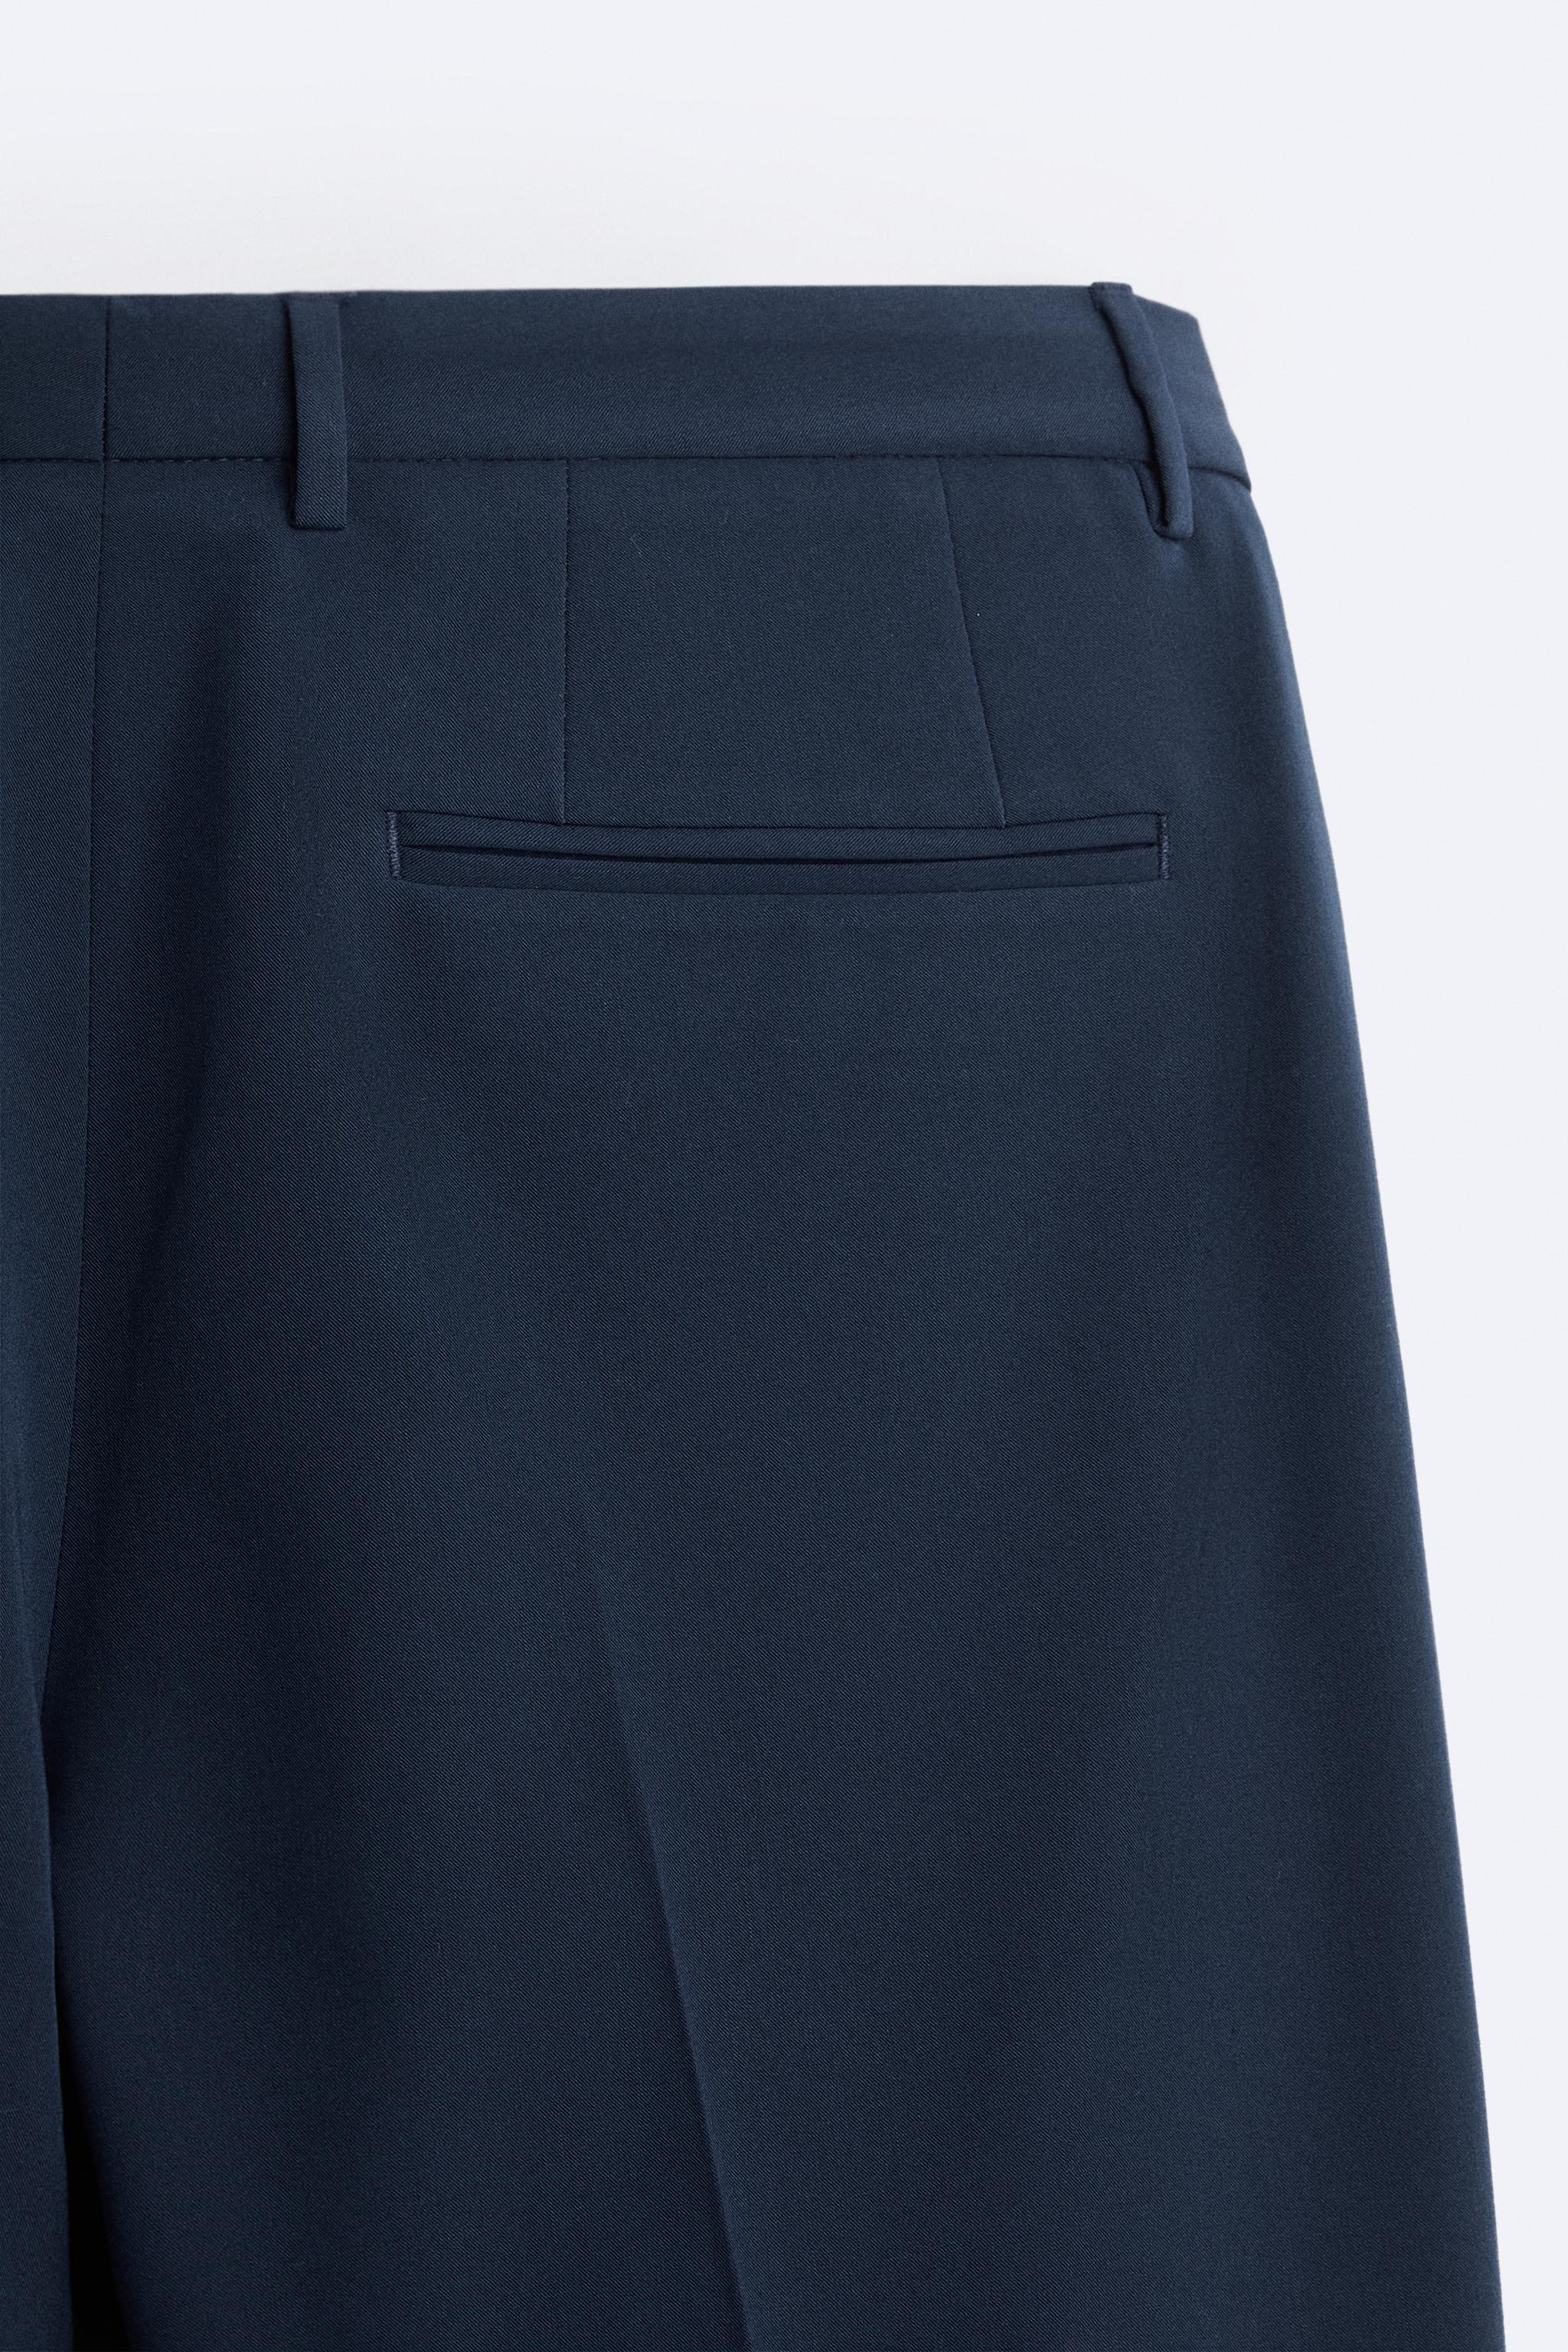 PS Stretch Pull-On Dress Pants BLACK – Raiment Fashion